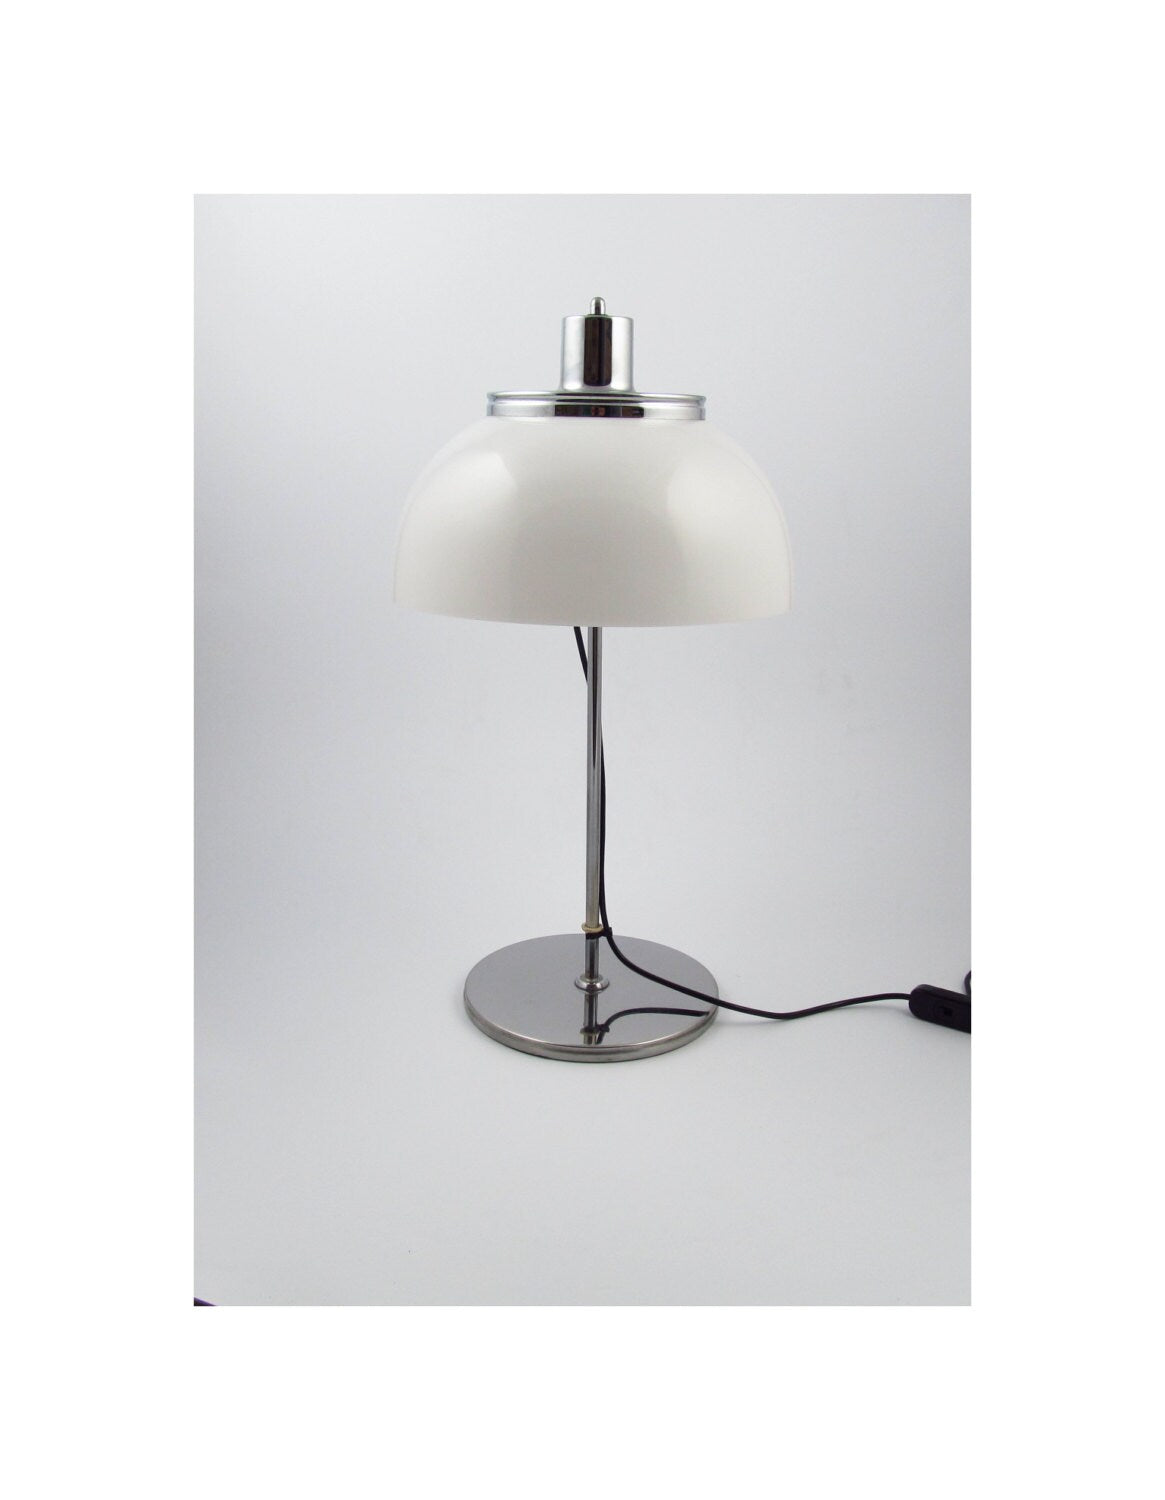 Guzzini 'Mushroom' tafellamp uit de jaren 70 Model 2240 in wit